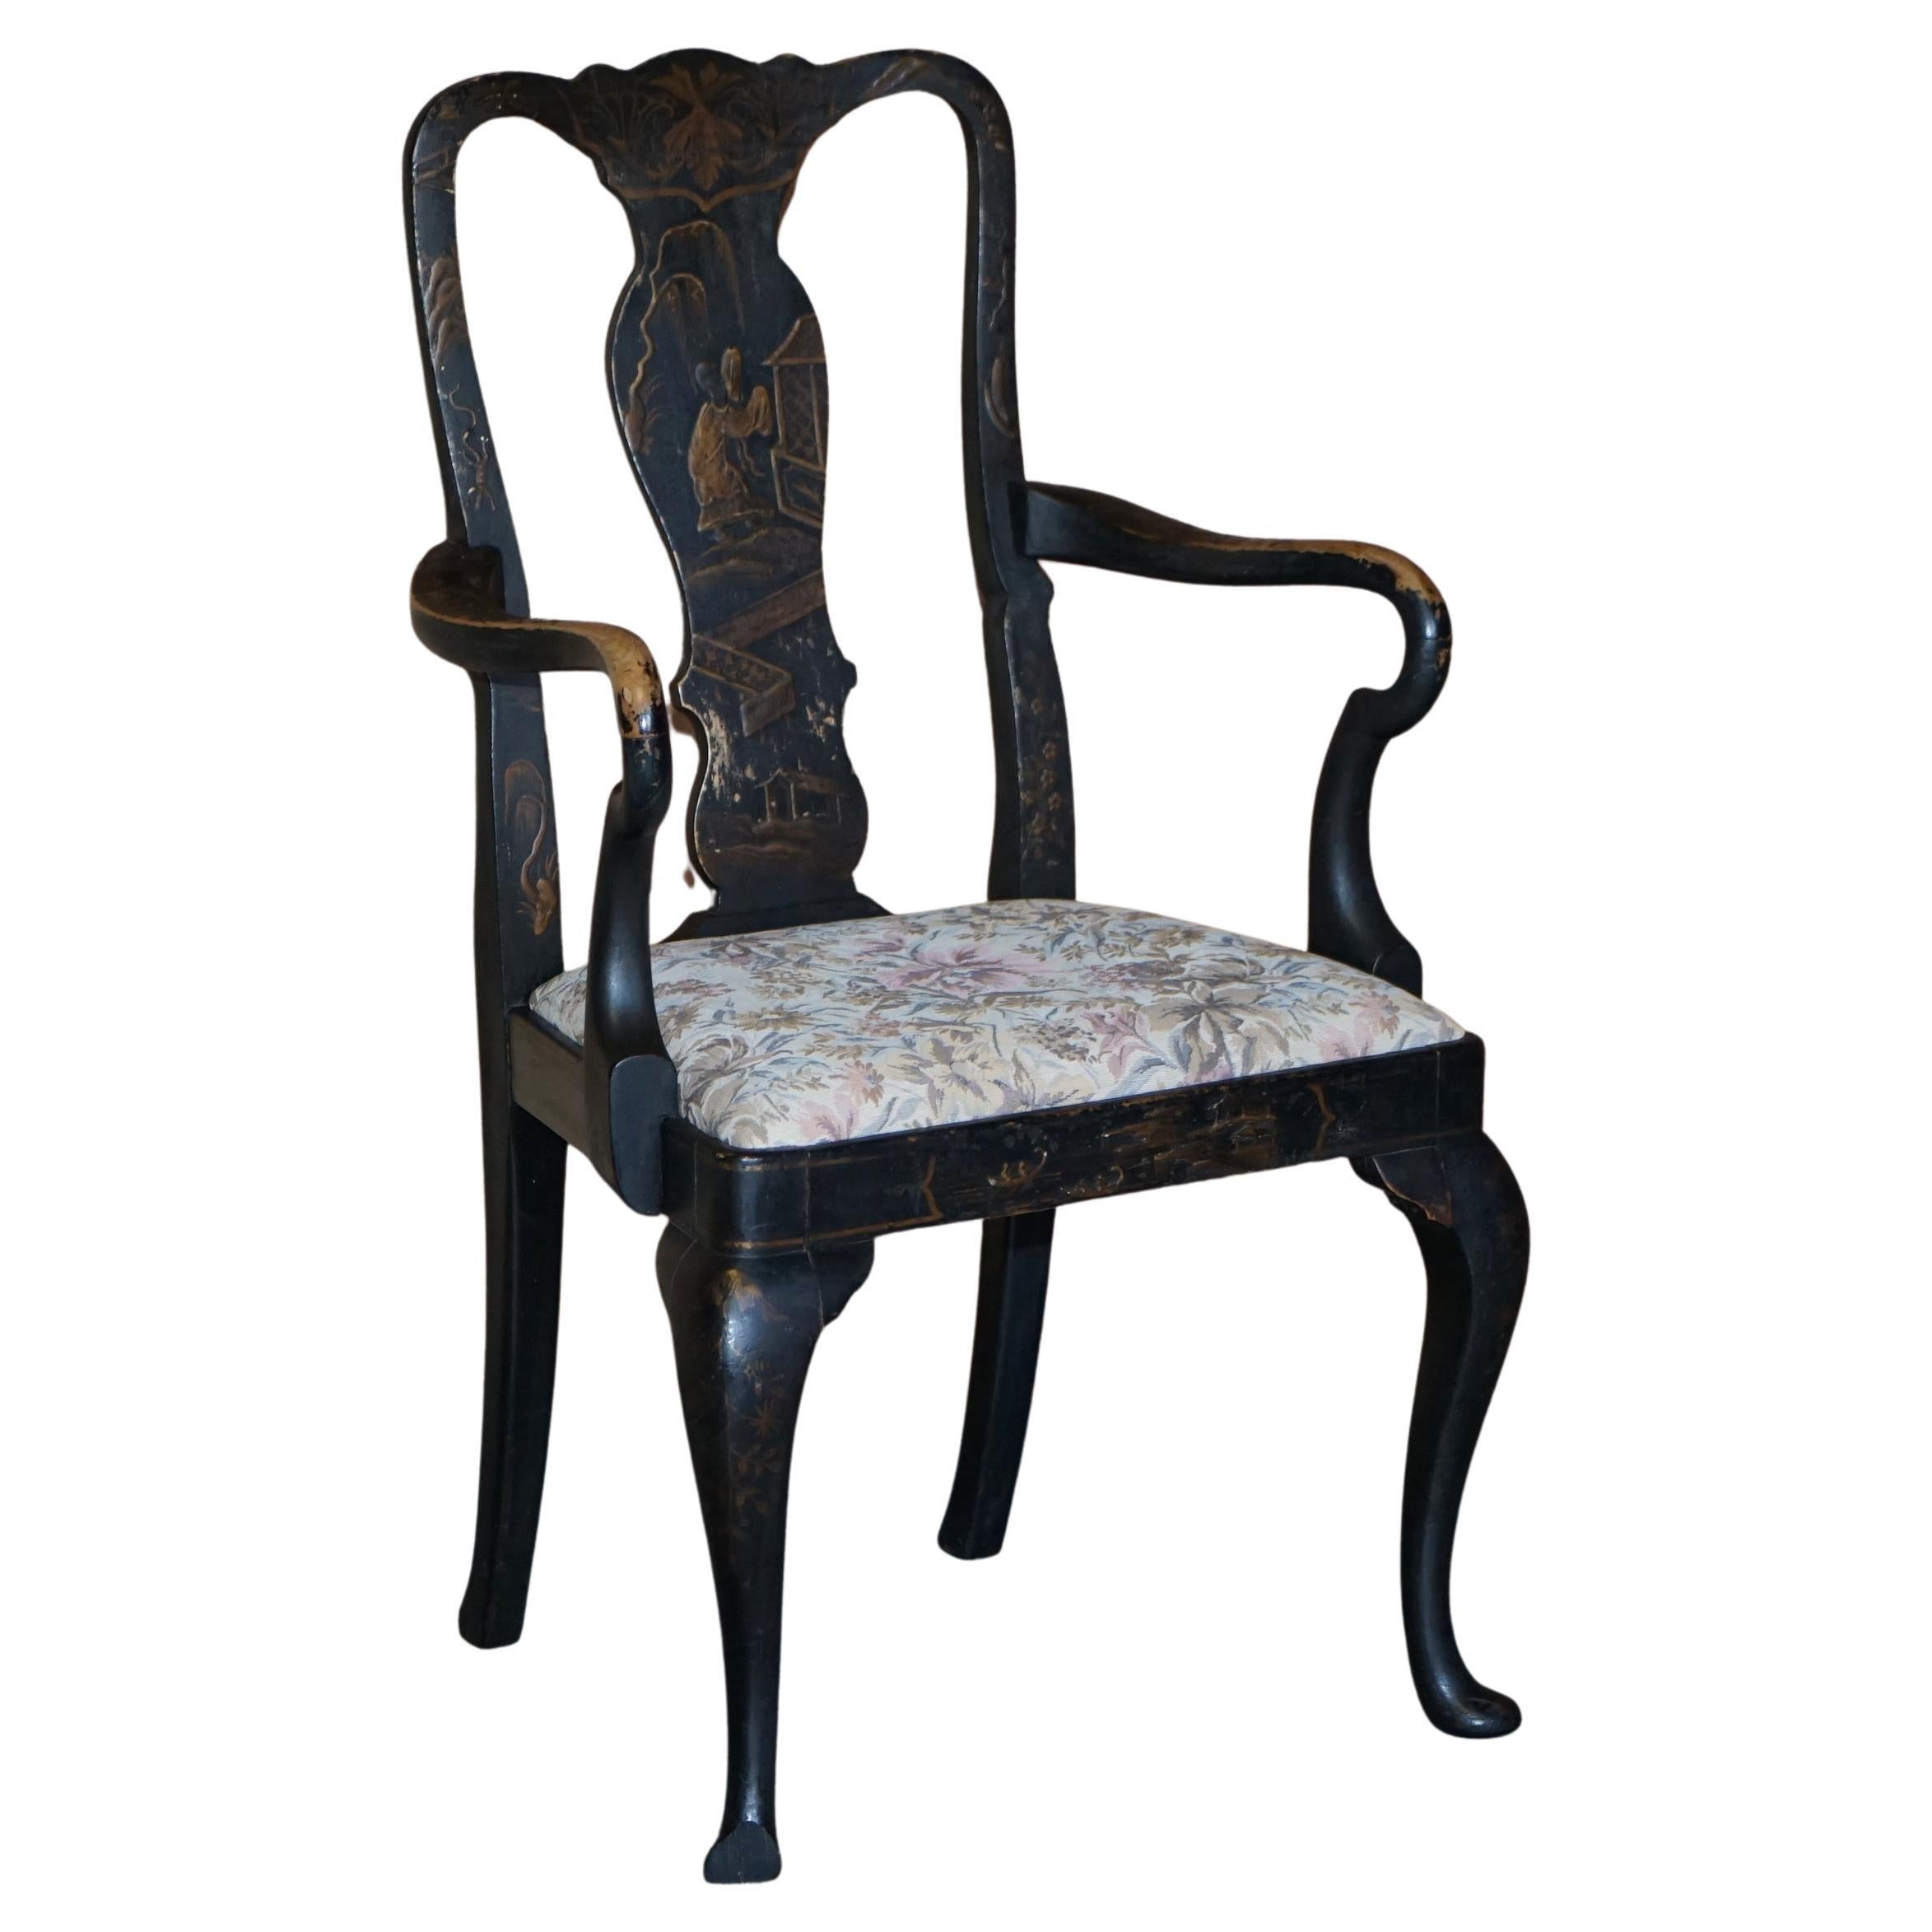 Antiker georgianischer Chinoiserie-Sessel, schwarzer Lack, Originalfarbe, gut getragen